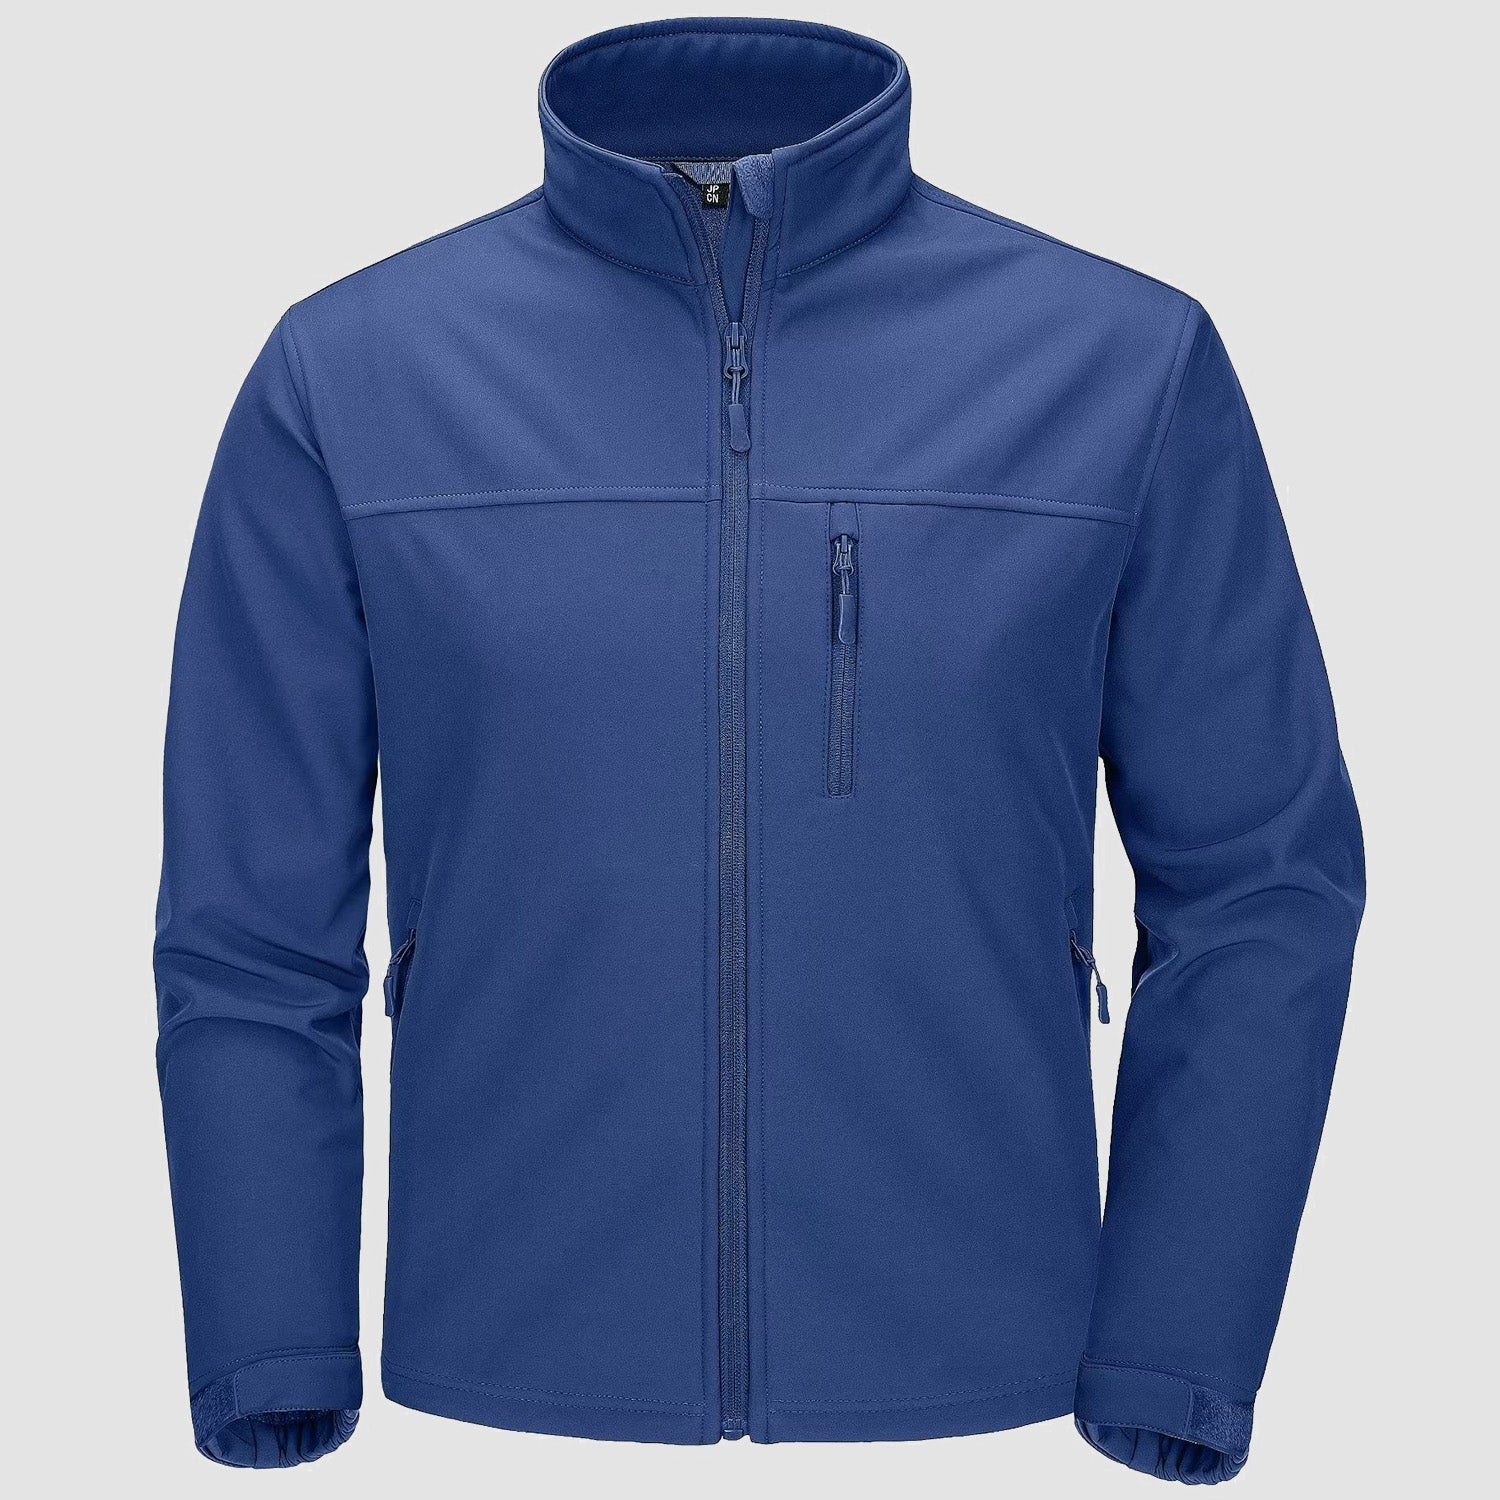 Men's Fleece Lined Jacket Lightweight Waterproof Jacket for Outdoors